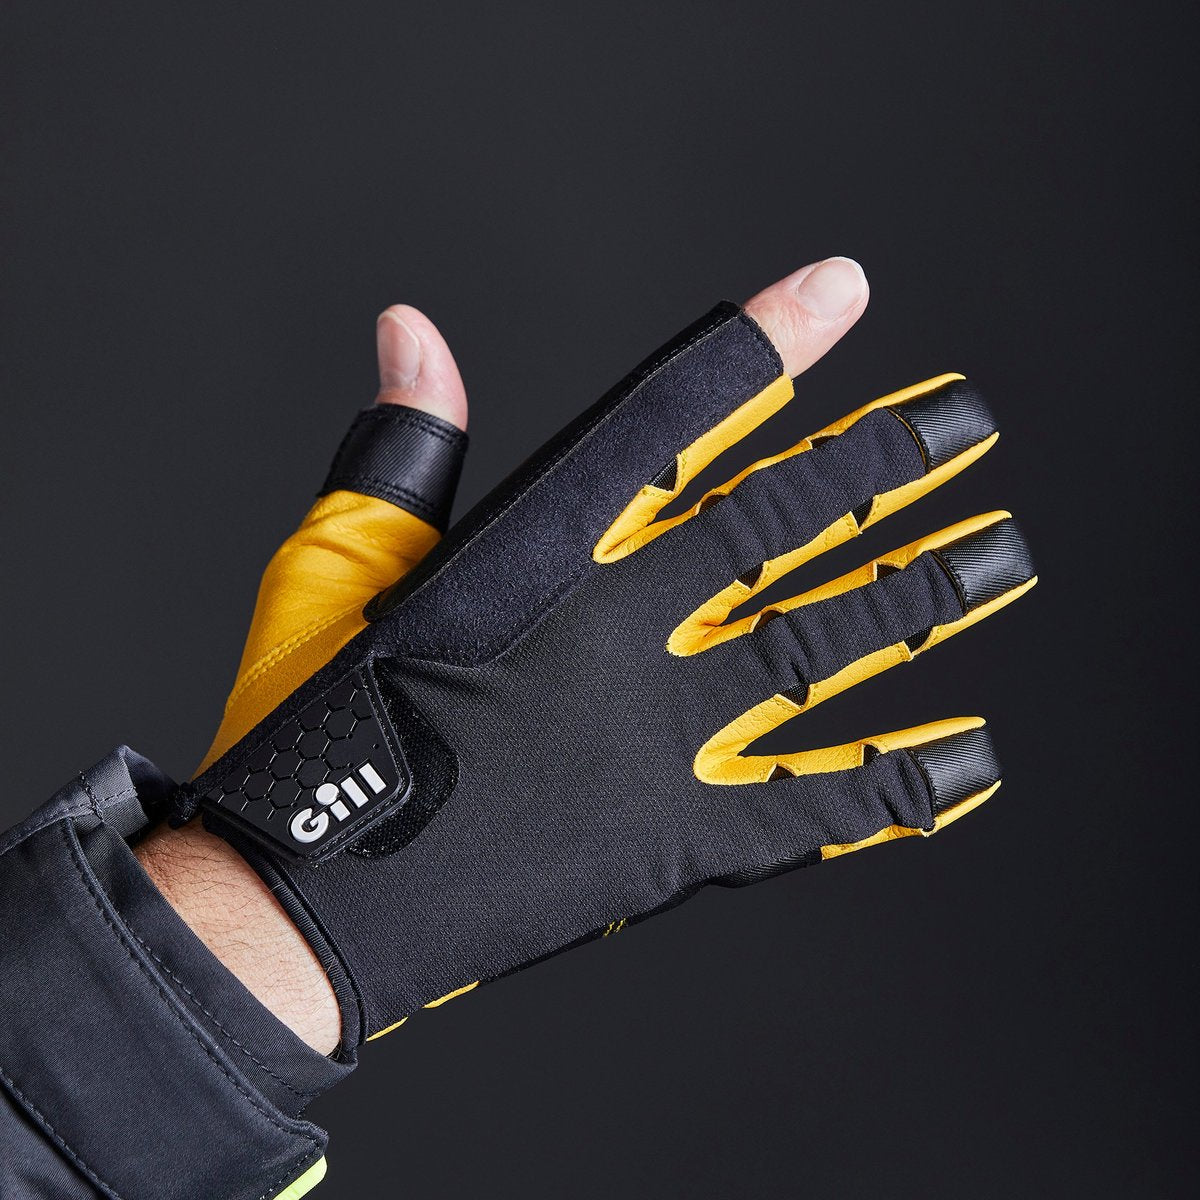 Gill Pro Gloves L/F zeilhandschoenen